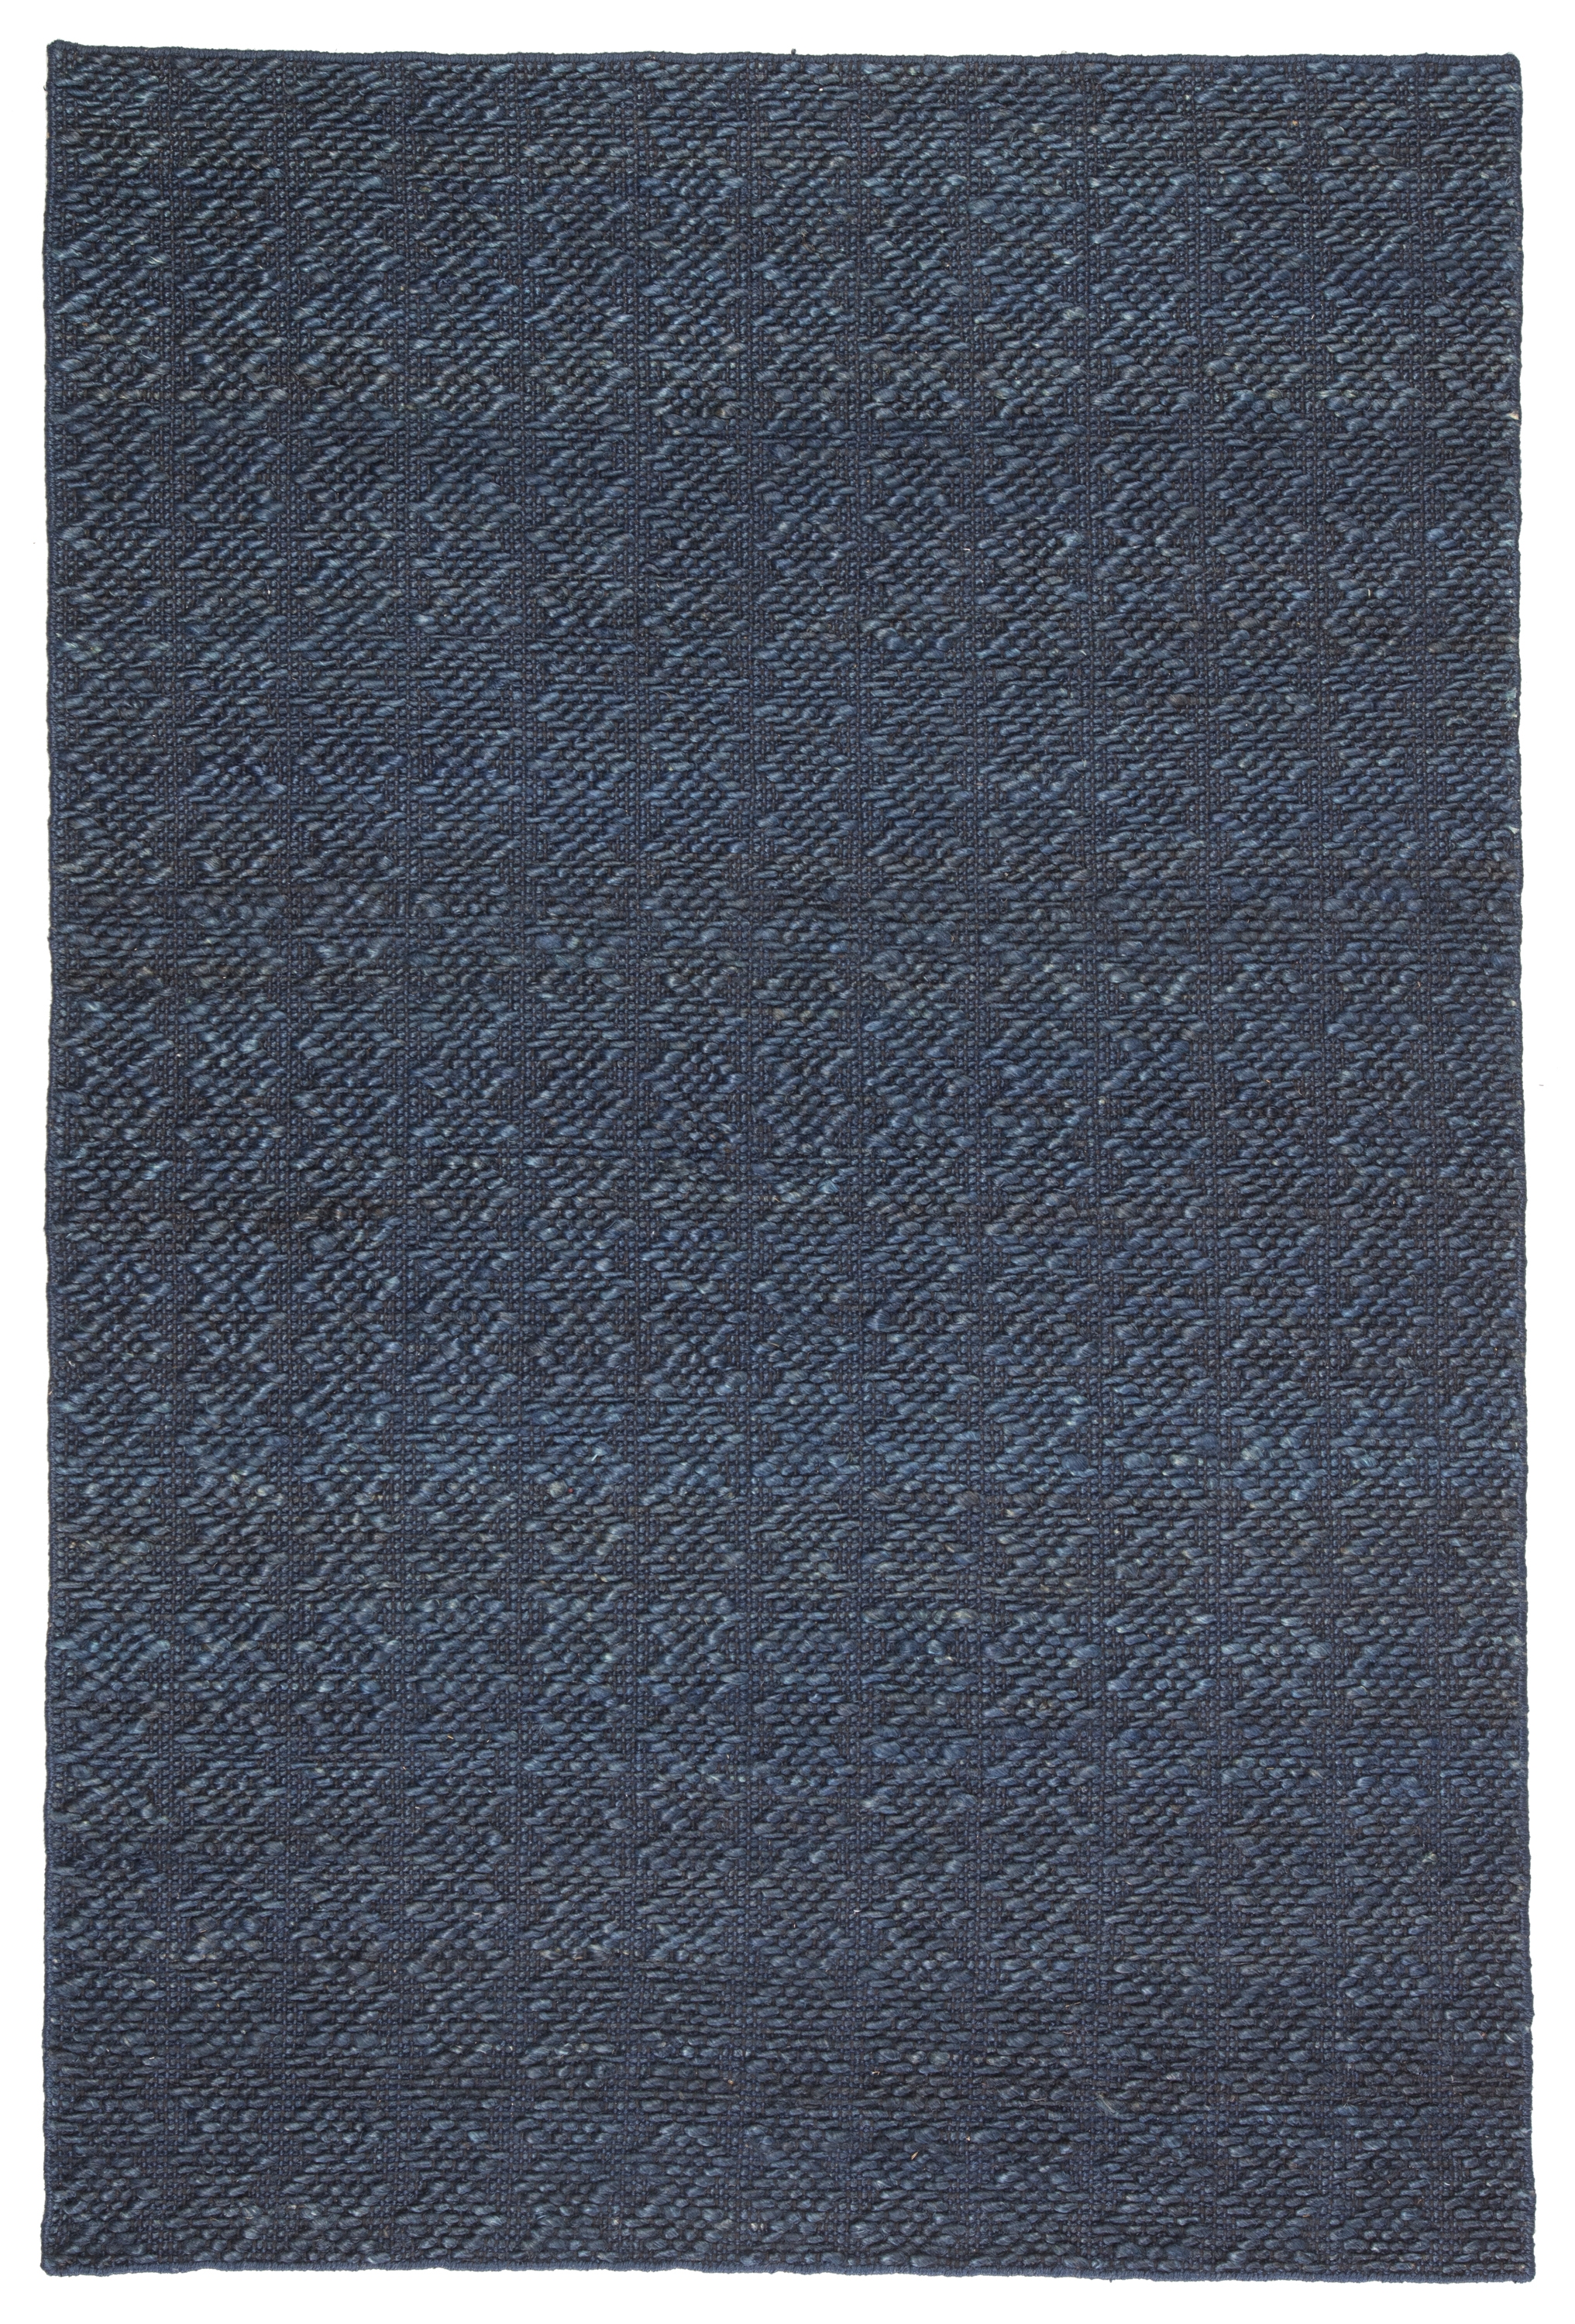 Devyn Natural Geometric Blue Area Rug (5'X8') - Image 0